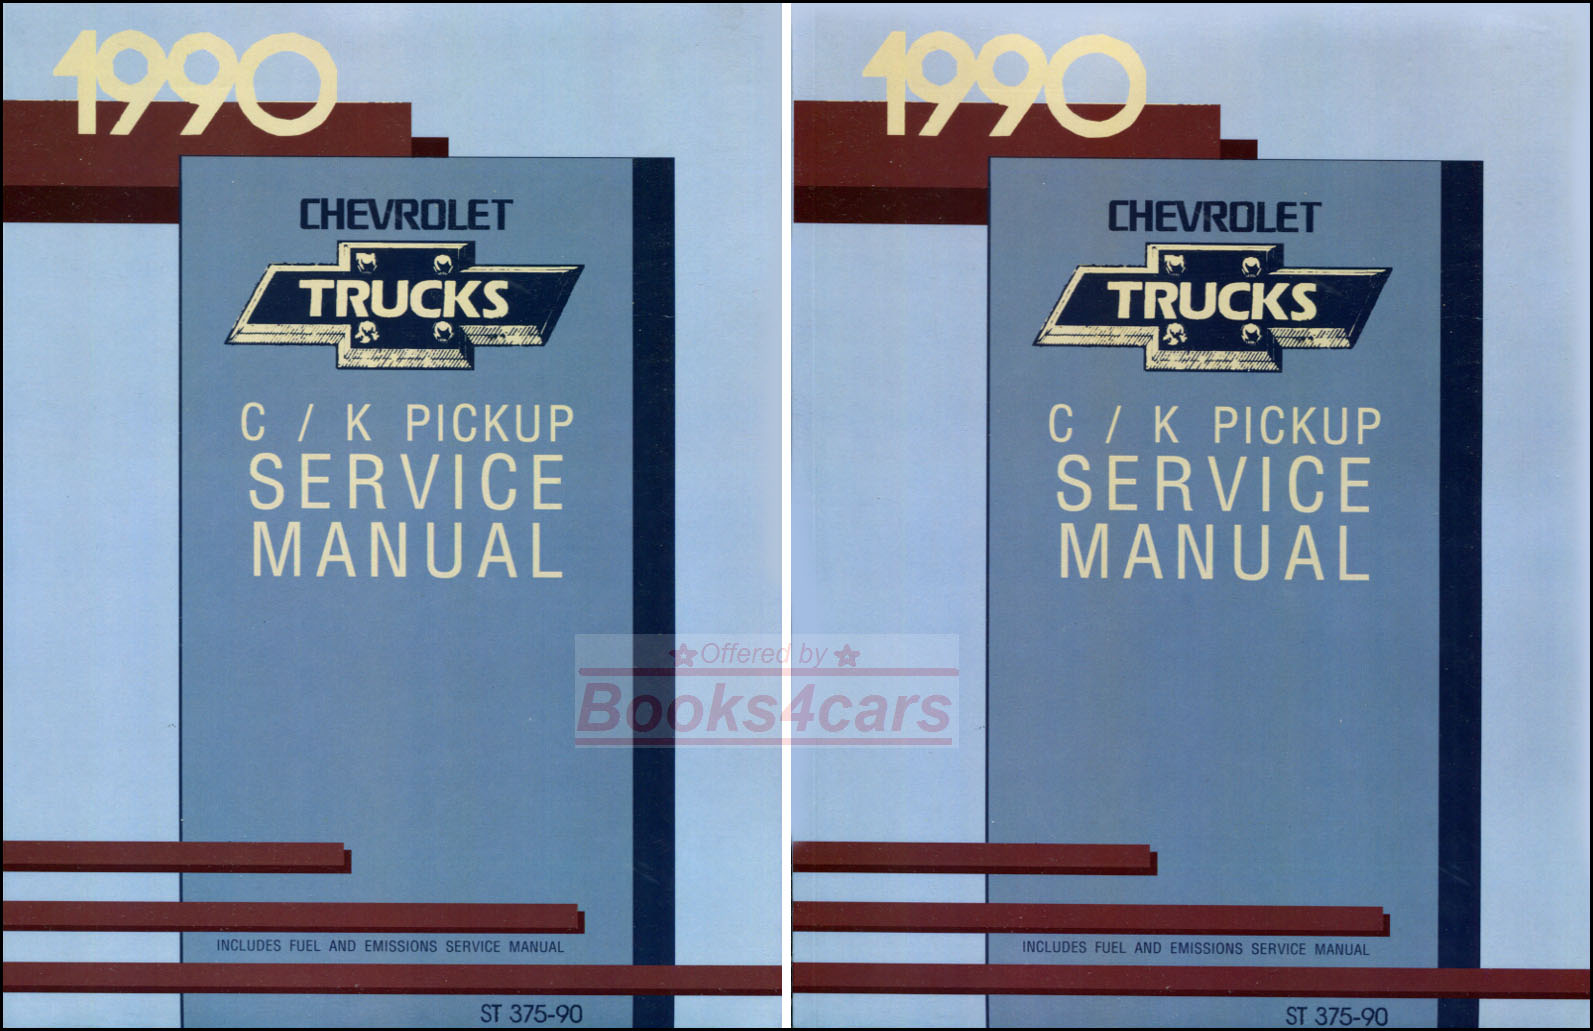 90 C/K Pickup 1/2 3/4 ton Shop Service Repair Manual by Chevrolet & GMC Truck